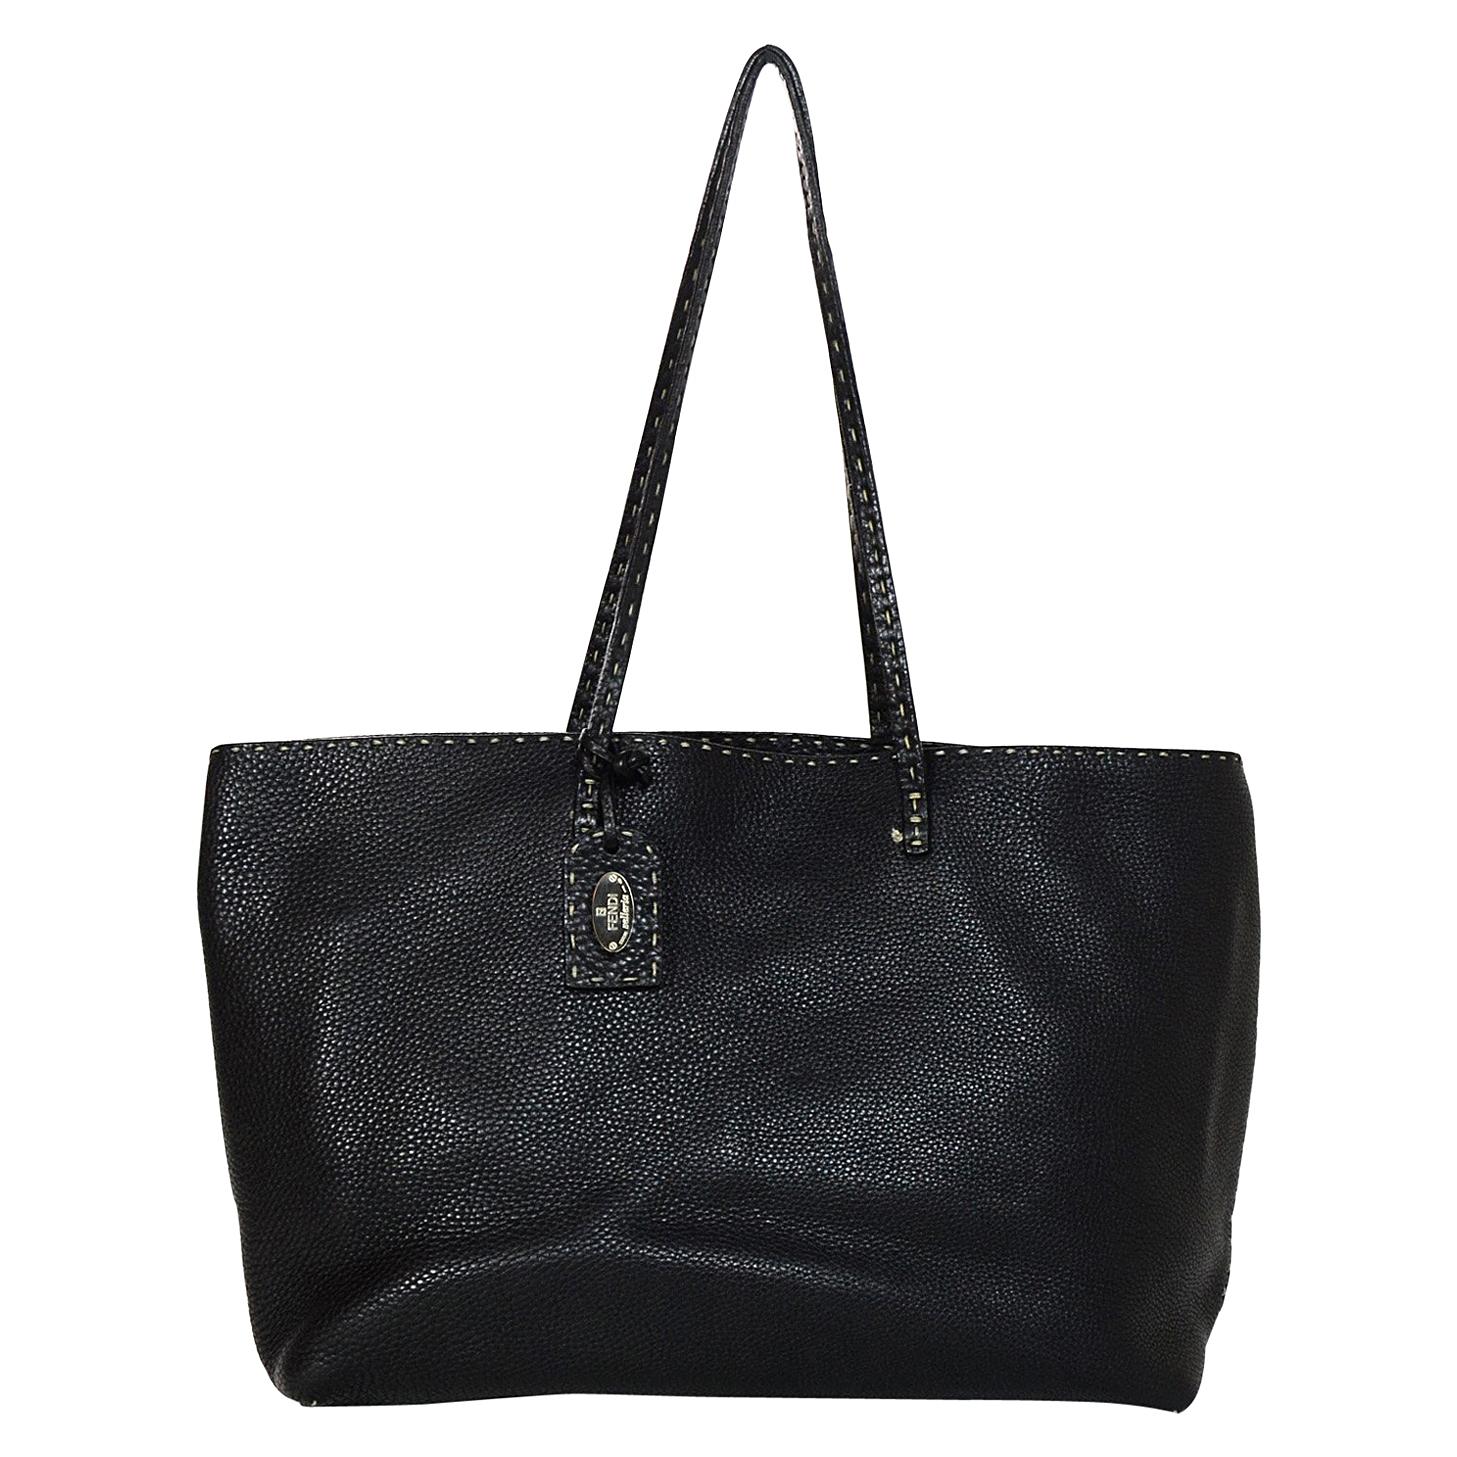 Fendi Black Pebbled Leather Selleria Tote Bag w/ Contrast Stitching